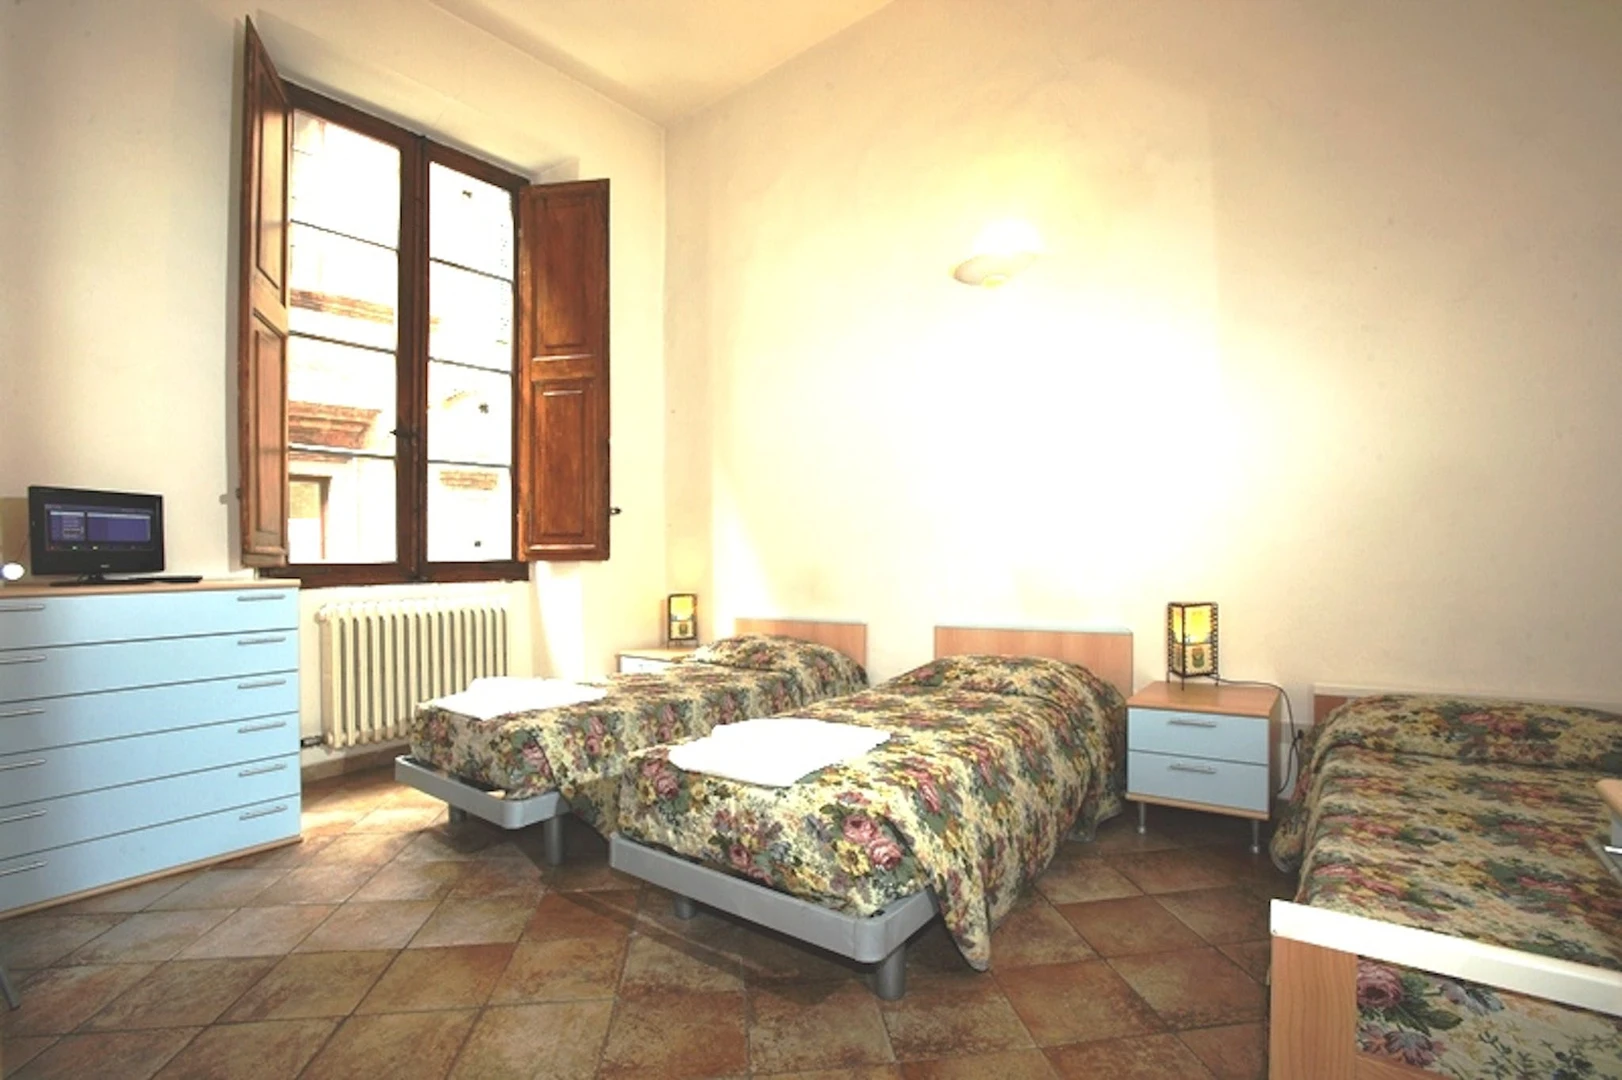 Shared room in 3-bedroom flat Siena